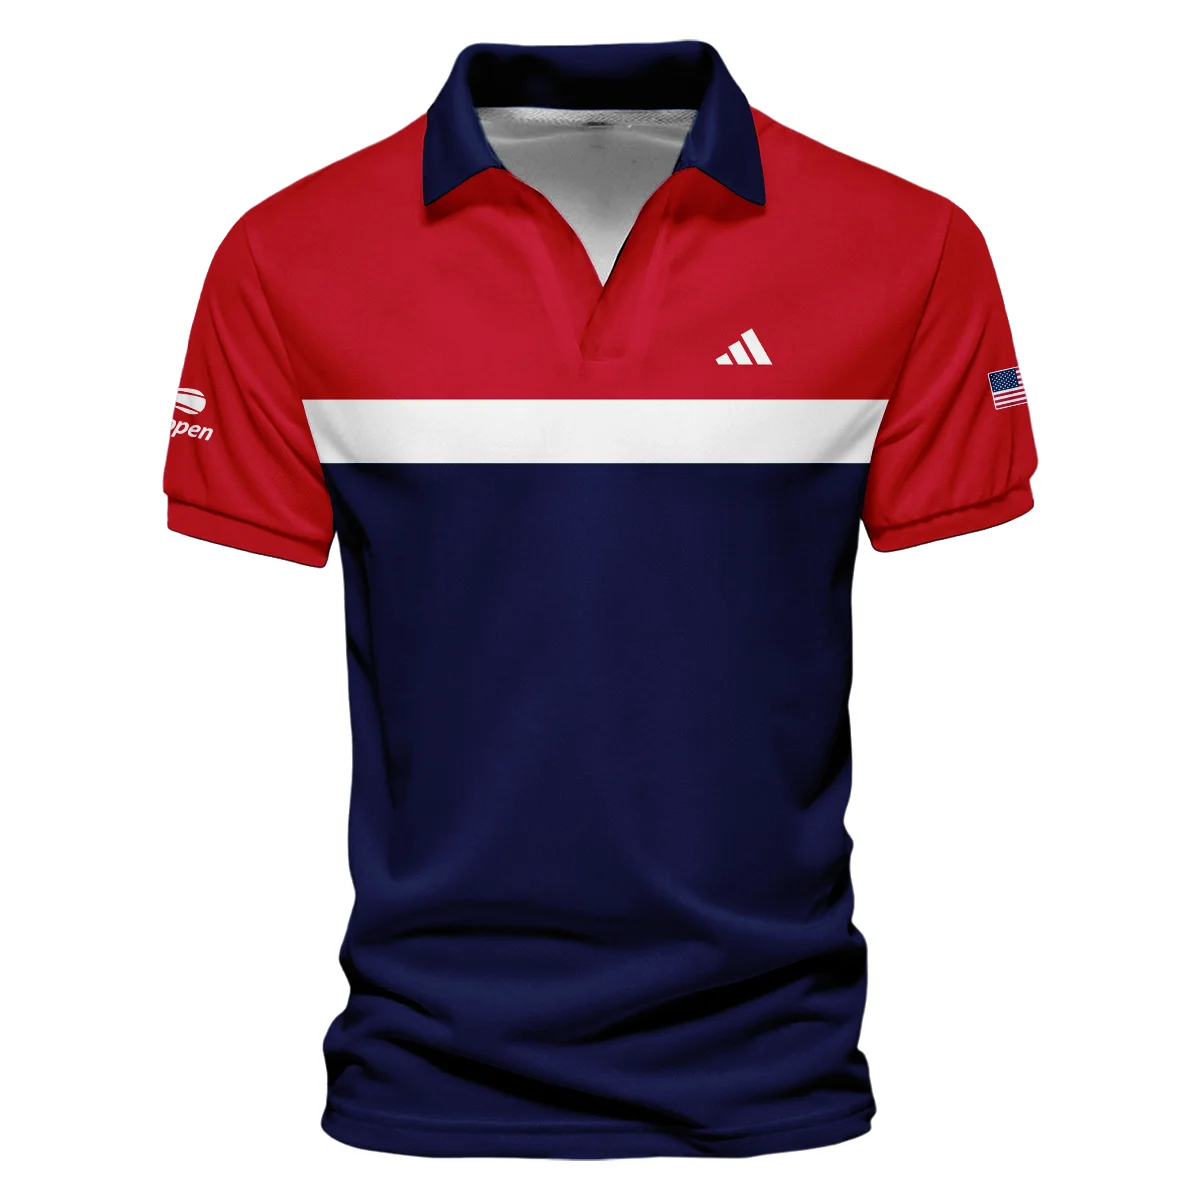 Adidas Blue Red White Background US Open Tennis Champions Quarter-Zip Jacket Style Classic Quarter-Zip Jacket